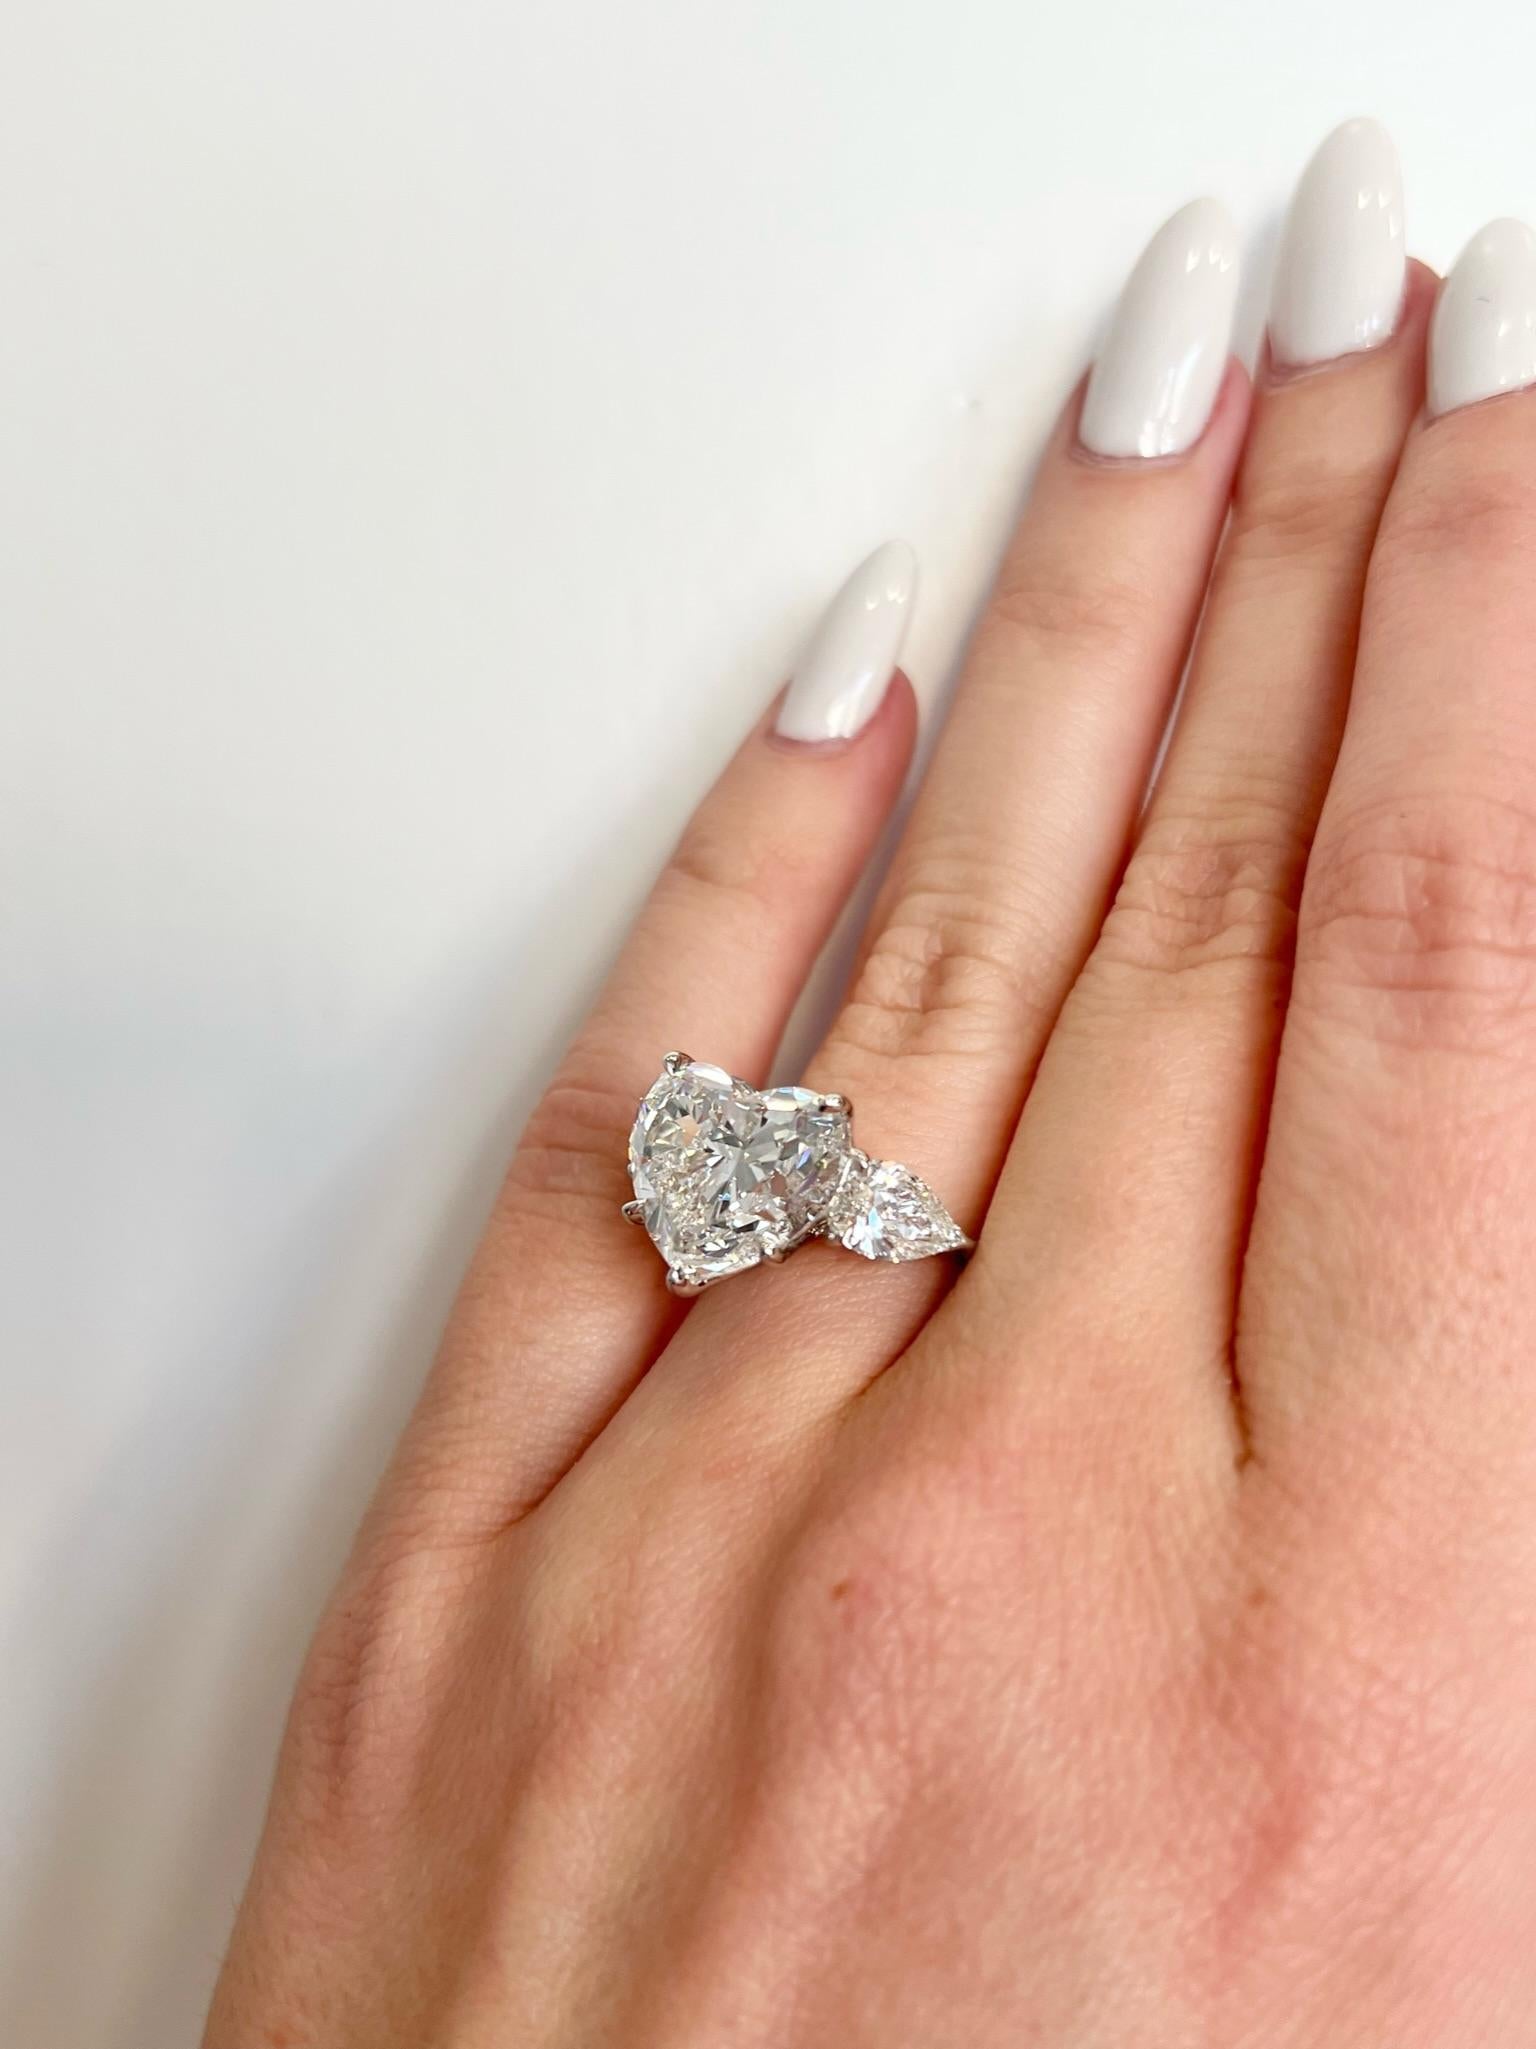 David Rosenberg 7.09 Carat Heart Shape F VS2 GIA 3 Stone Diamond Engagement Ring For Sale 2